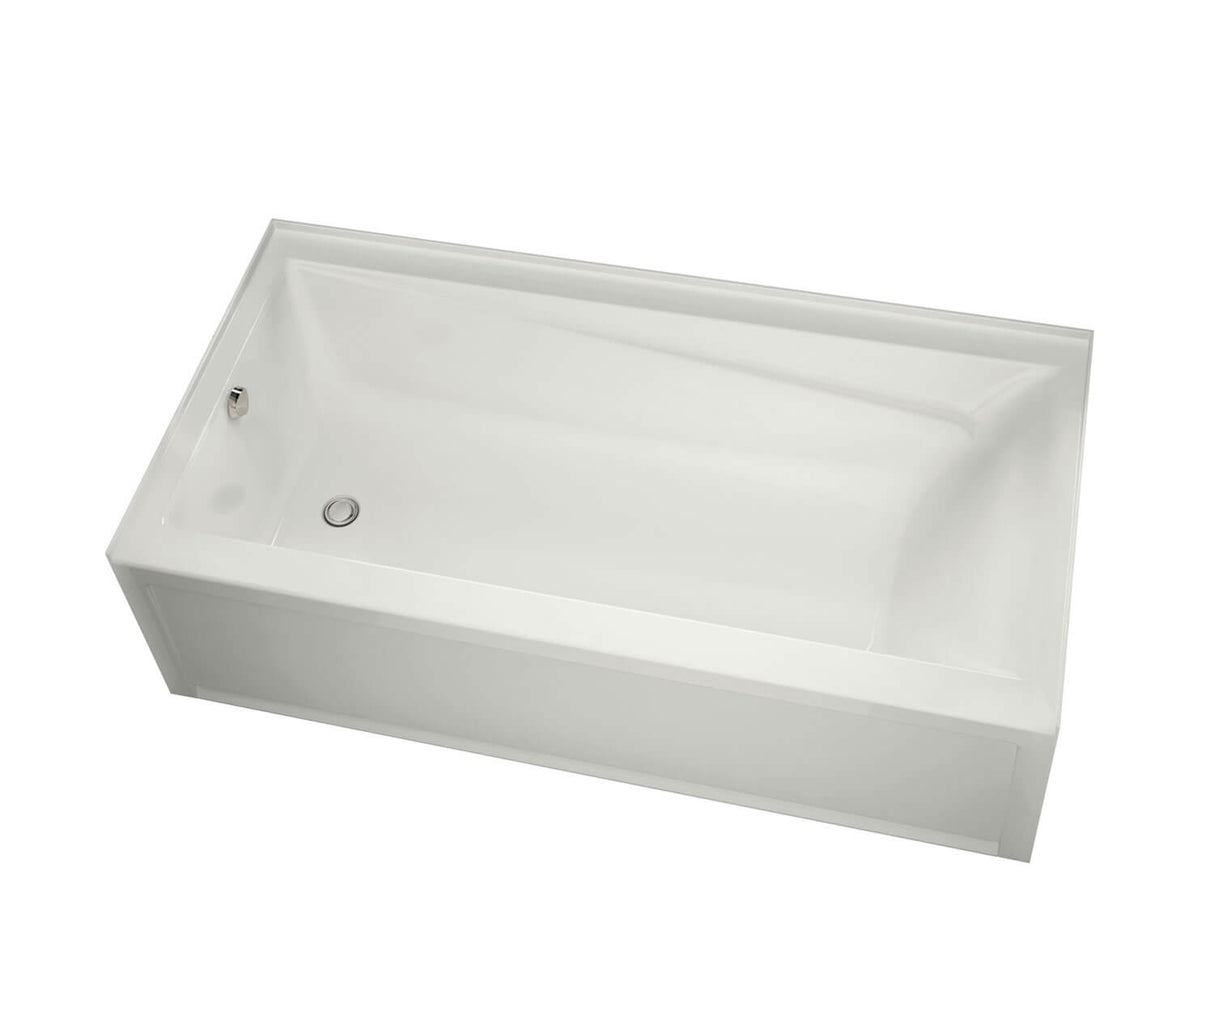 MAAX 106225-000-001-101 Exhibit 7232 IFS Acrylic Alcove Right-Hand Drain Bathtub in White